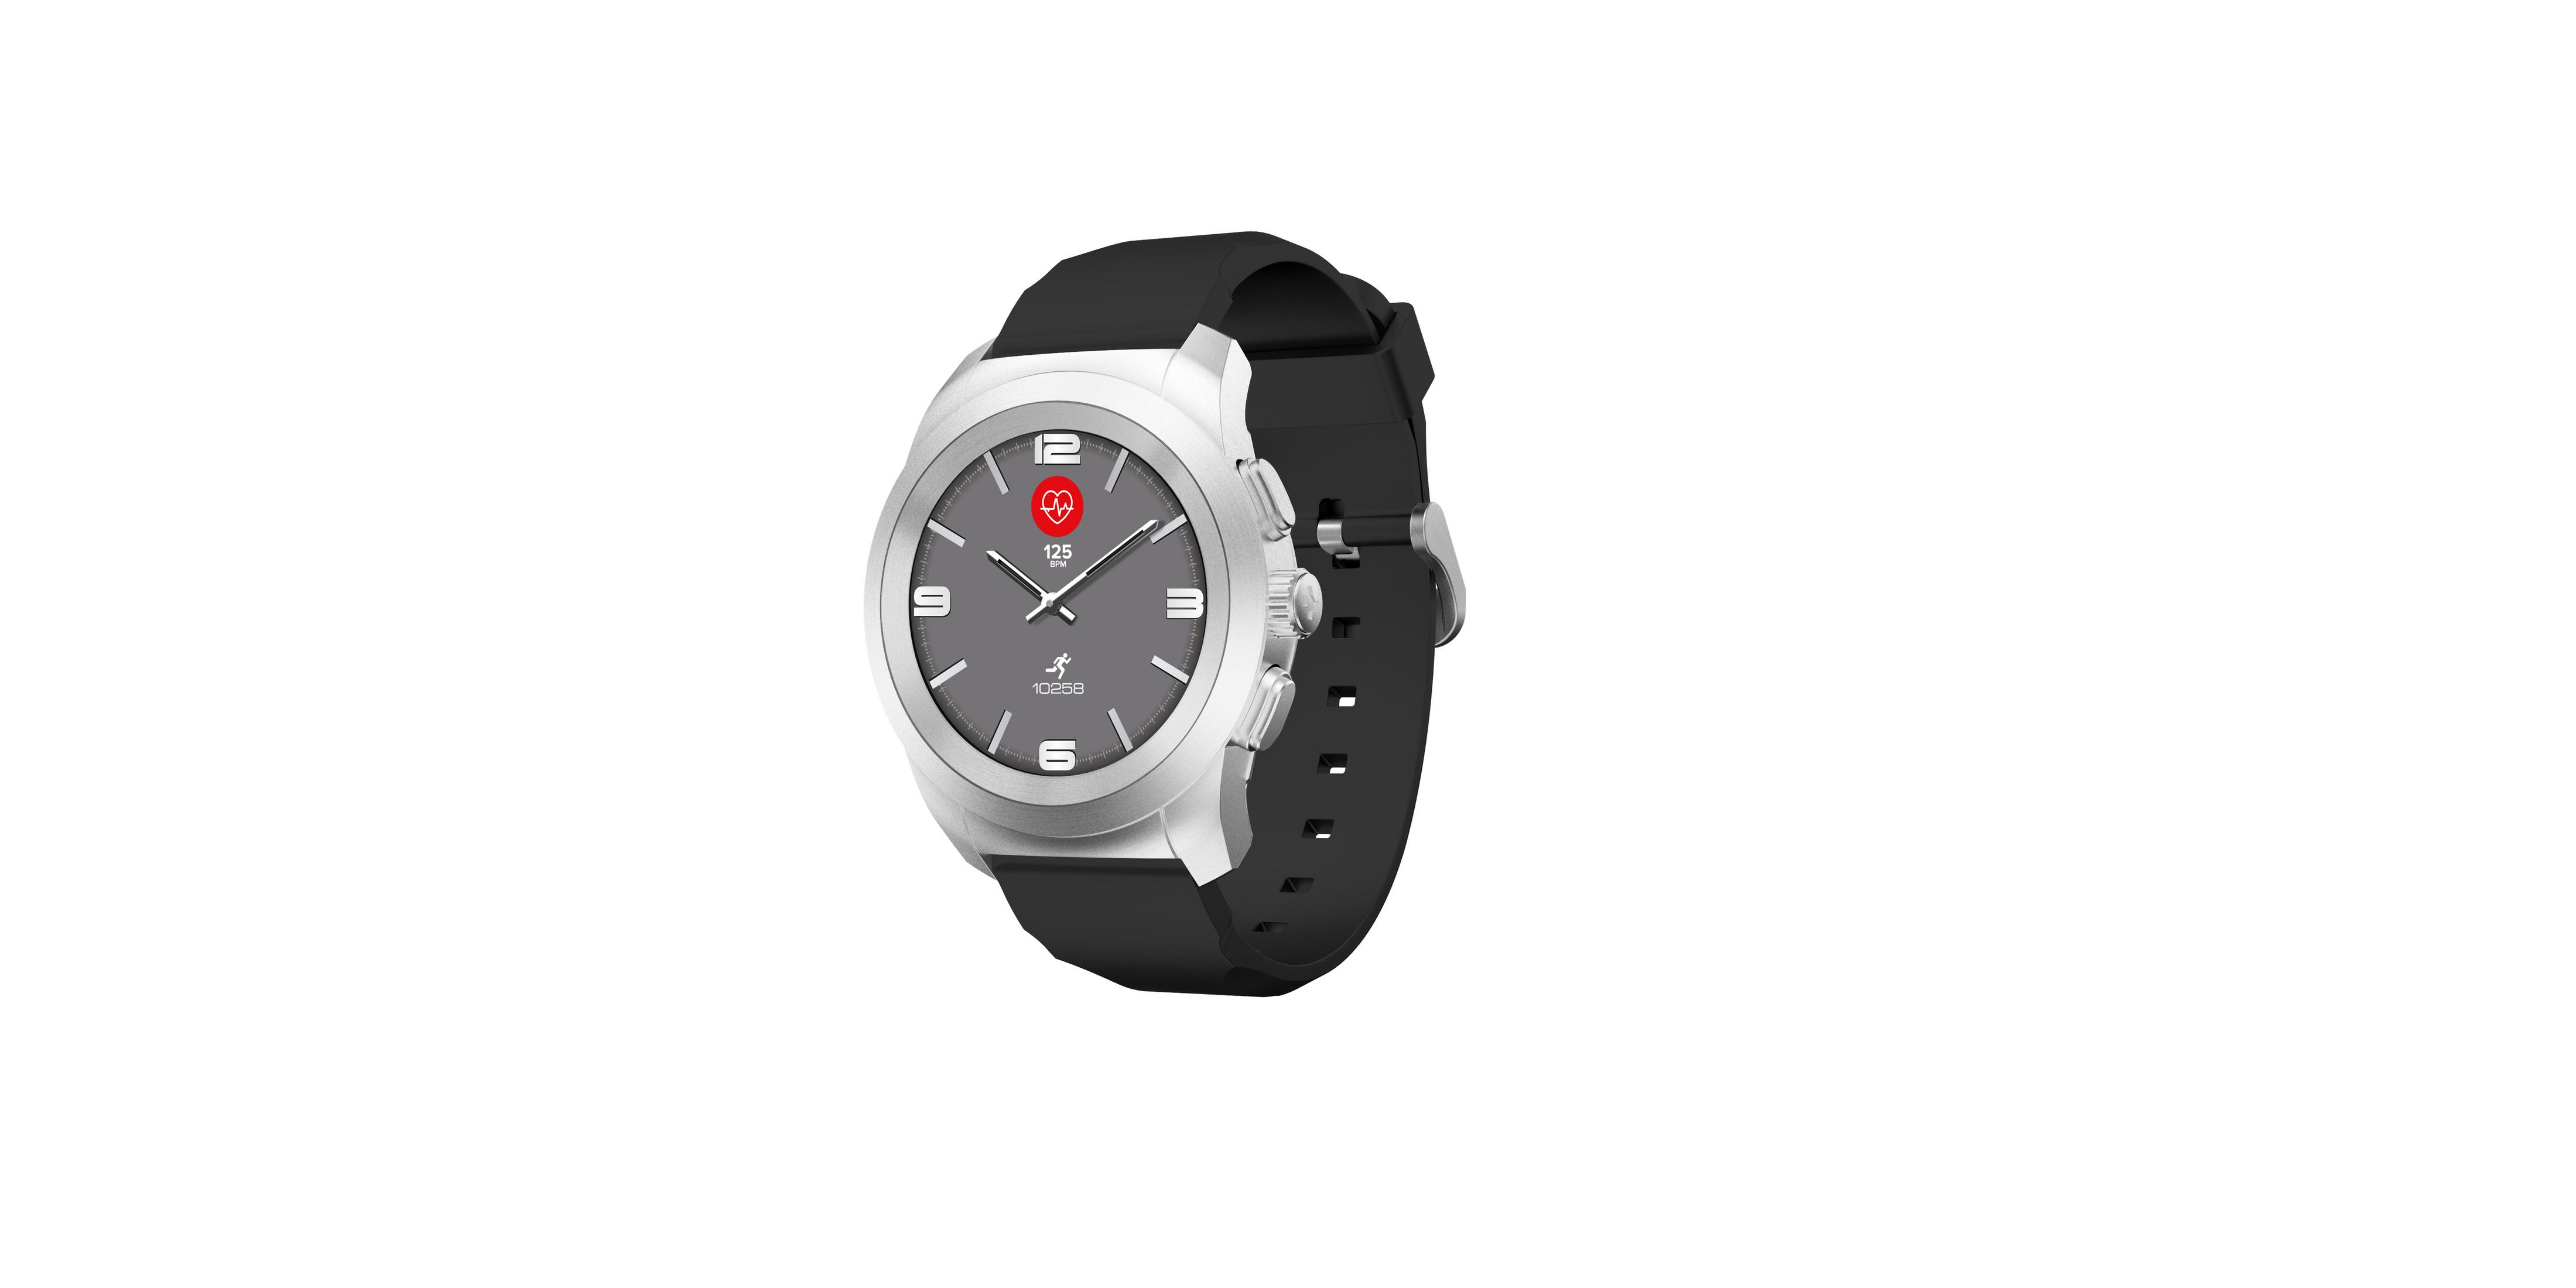 MYKRONOZ BRUSHED SILVER/BLACK Smartwatch Silikon, Silber/Schwarz mm, FLAT REGULAR SILICON 210